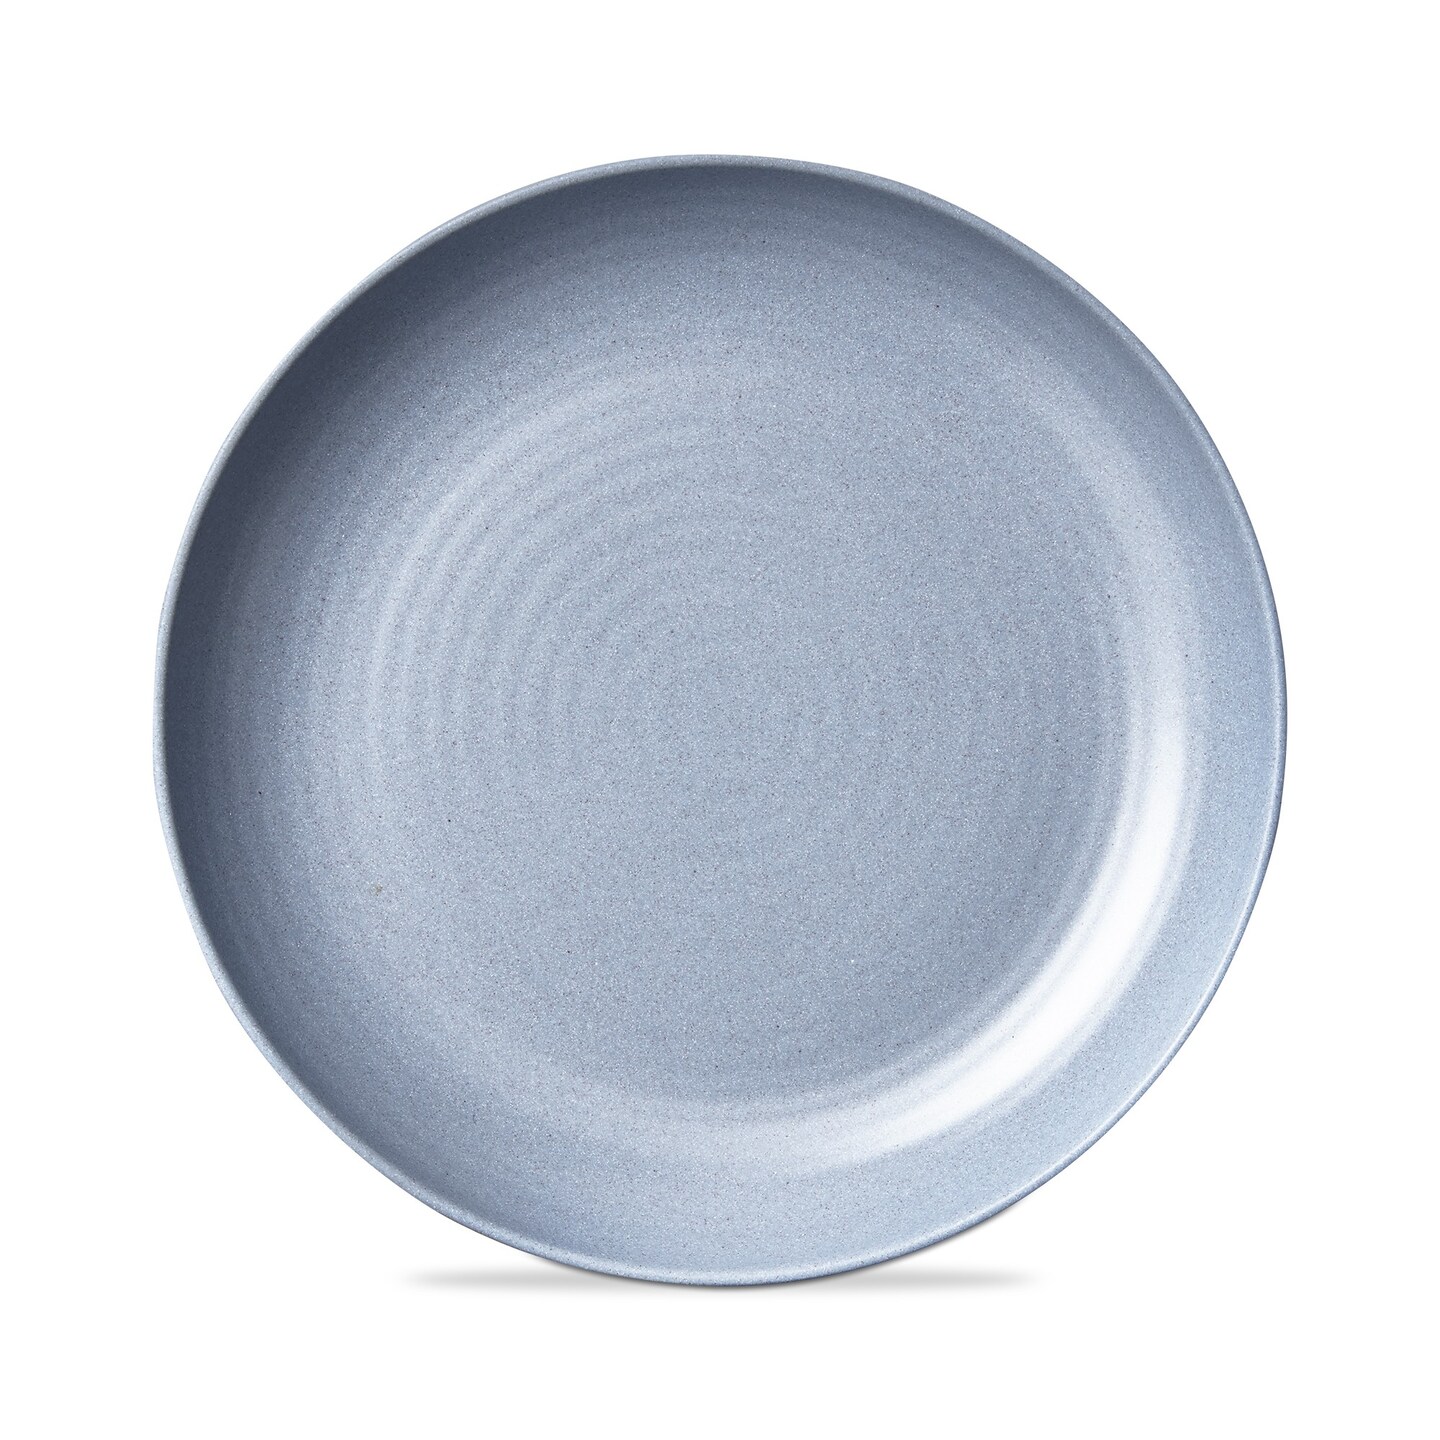 Light Blue Brooklyn Melamine Brooklyn Melamine Plastic Dinning Dinner Plate Dishwasher Safe Indoor/Outdoor 11x11 inch Dinner Plate